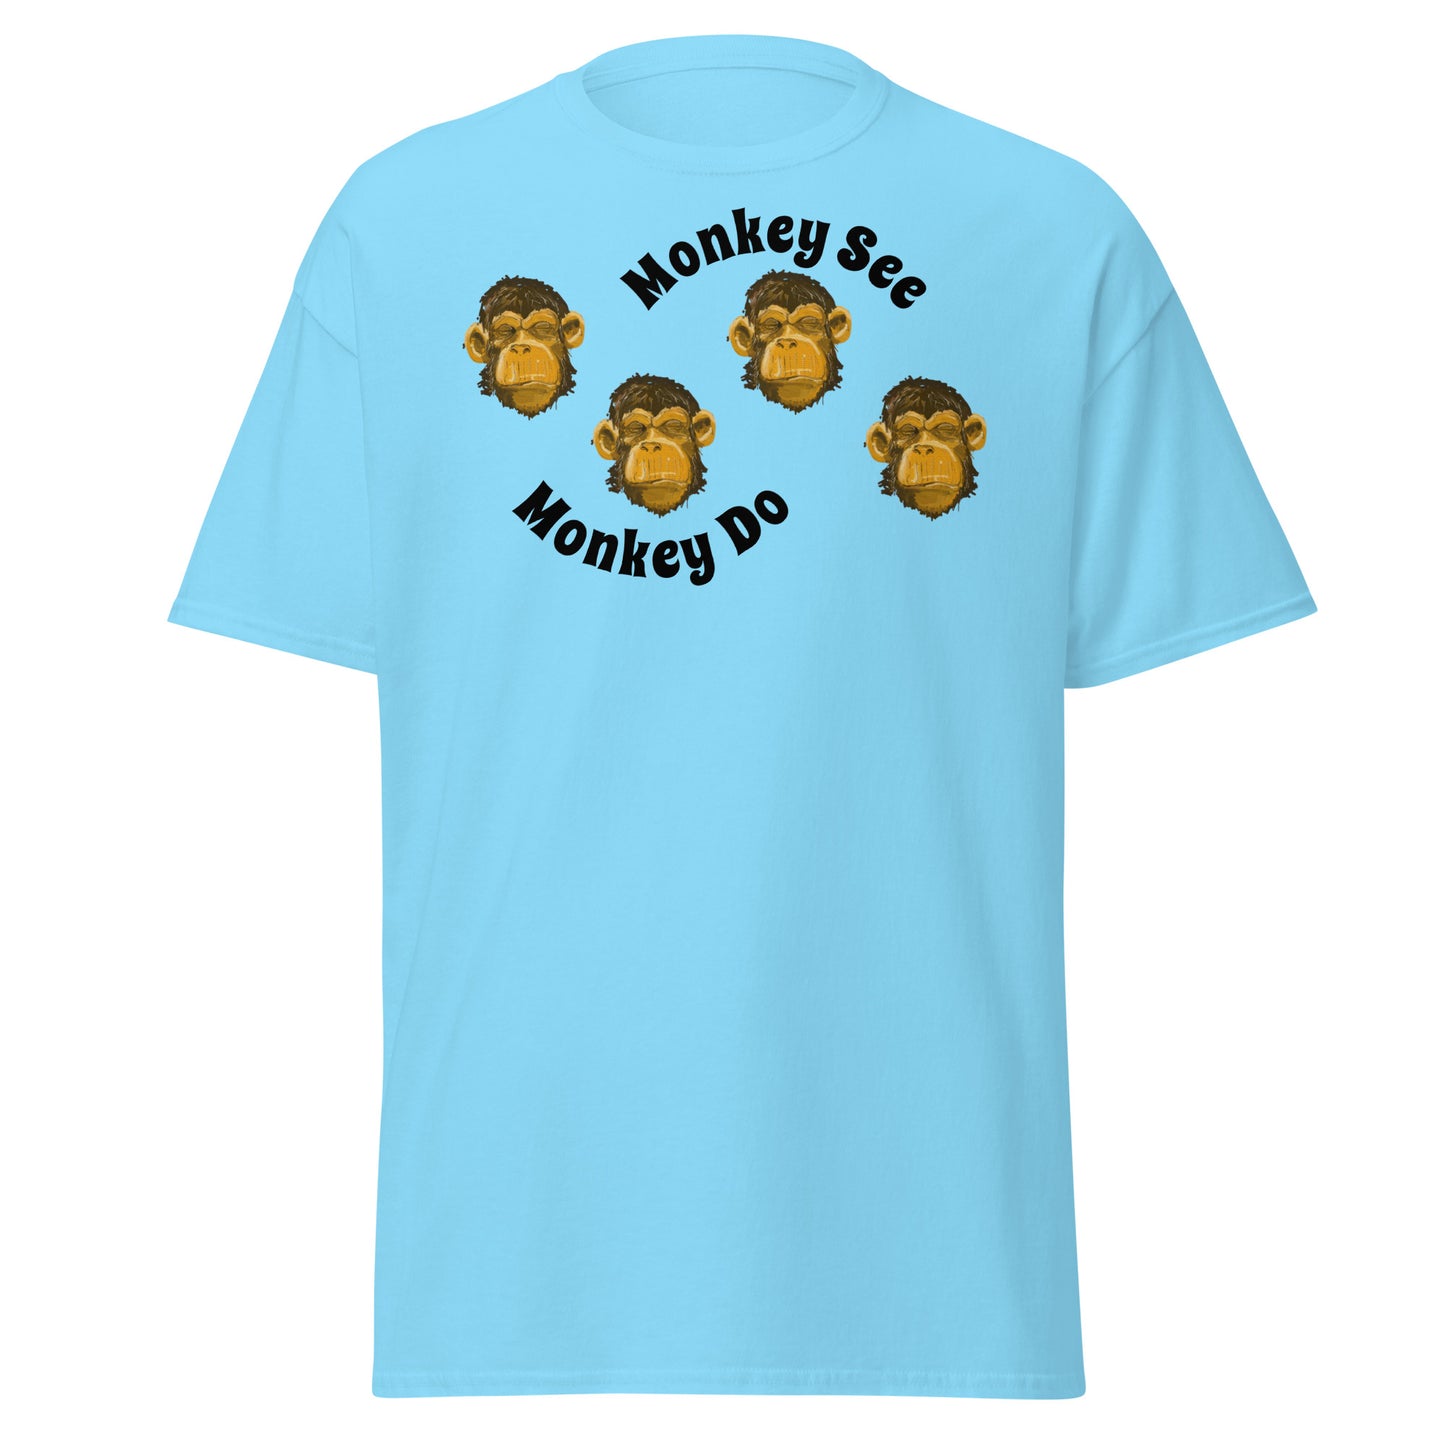 Monkey see monkey do shirt